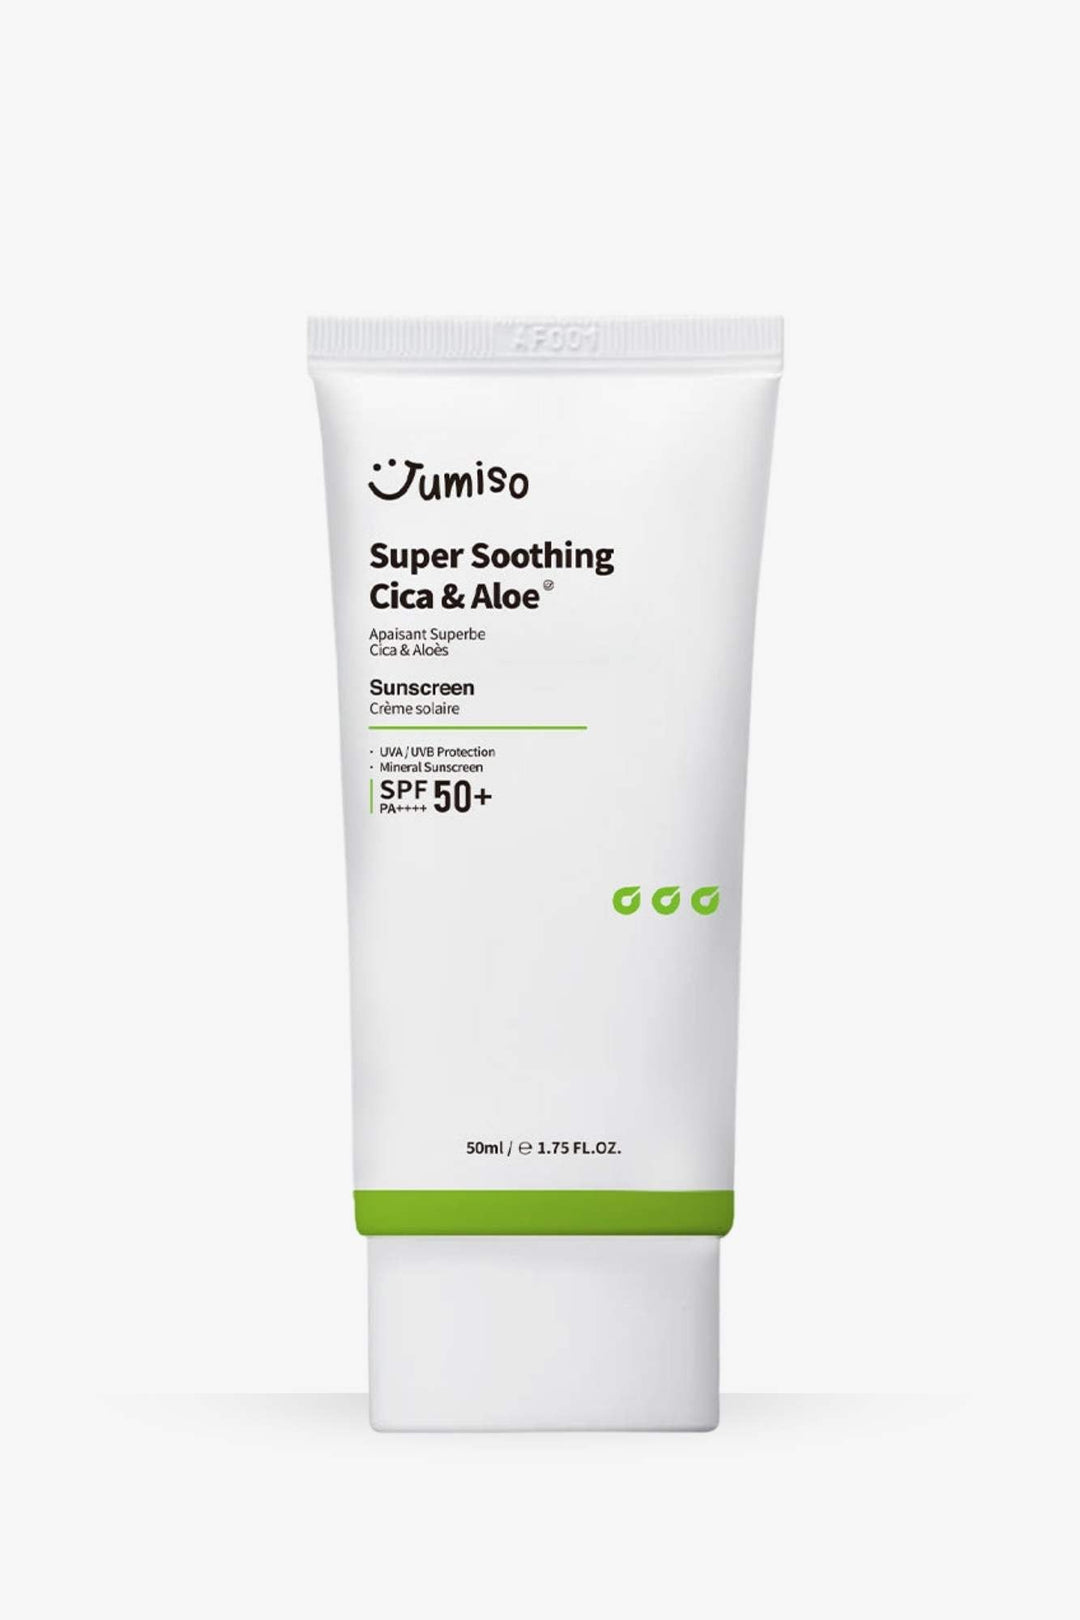 Jumiso Super Soothing Cica & Aloe Sunscreen 50ml